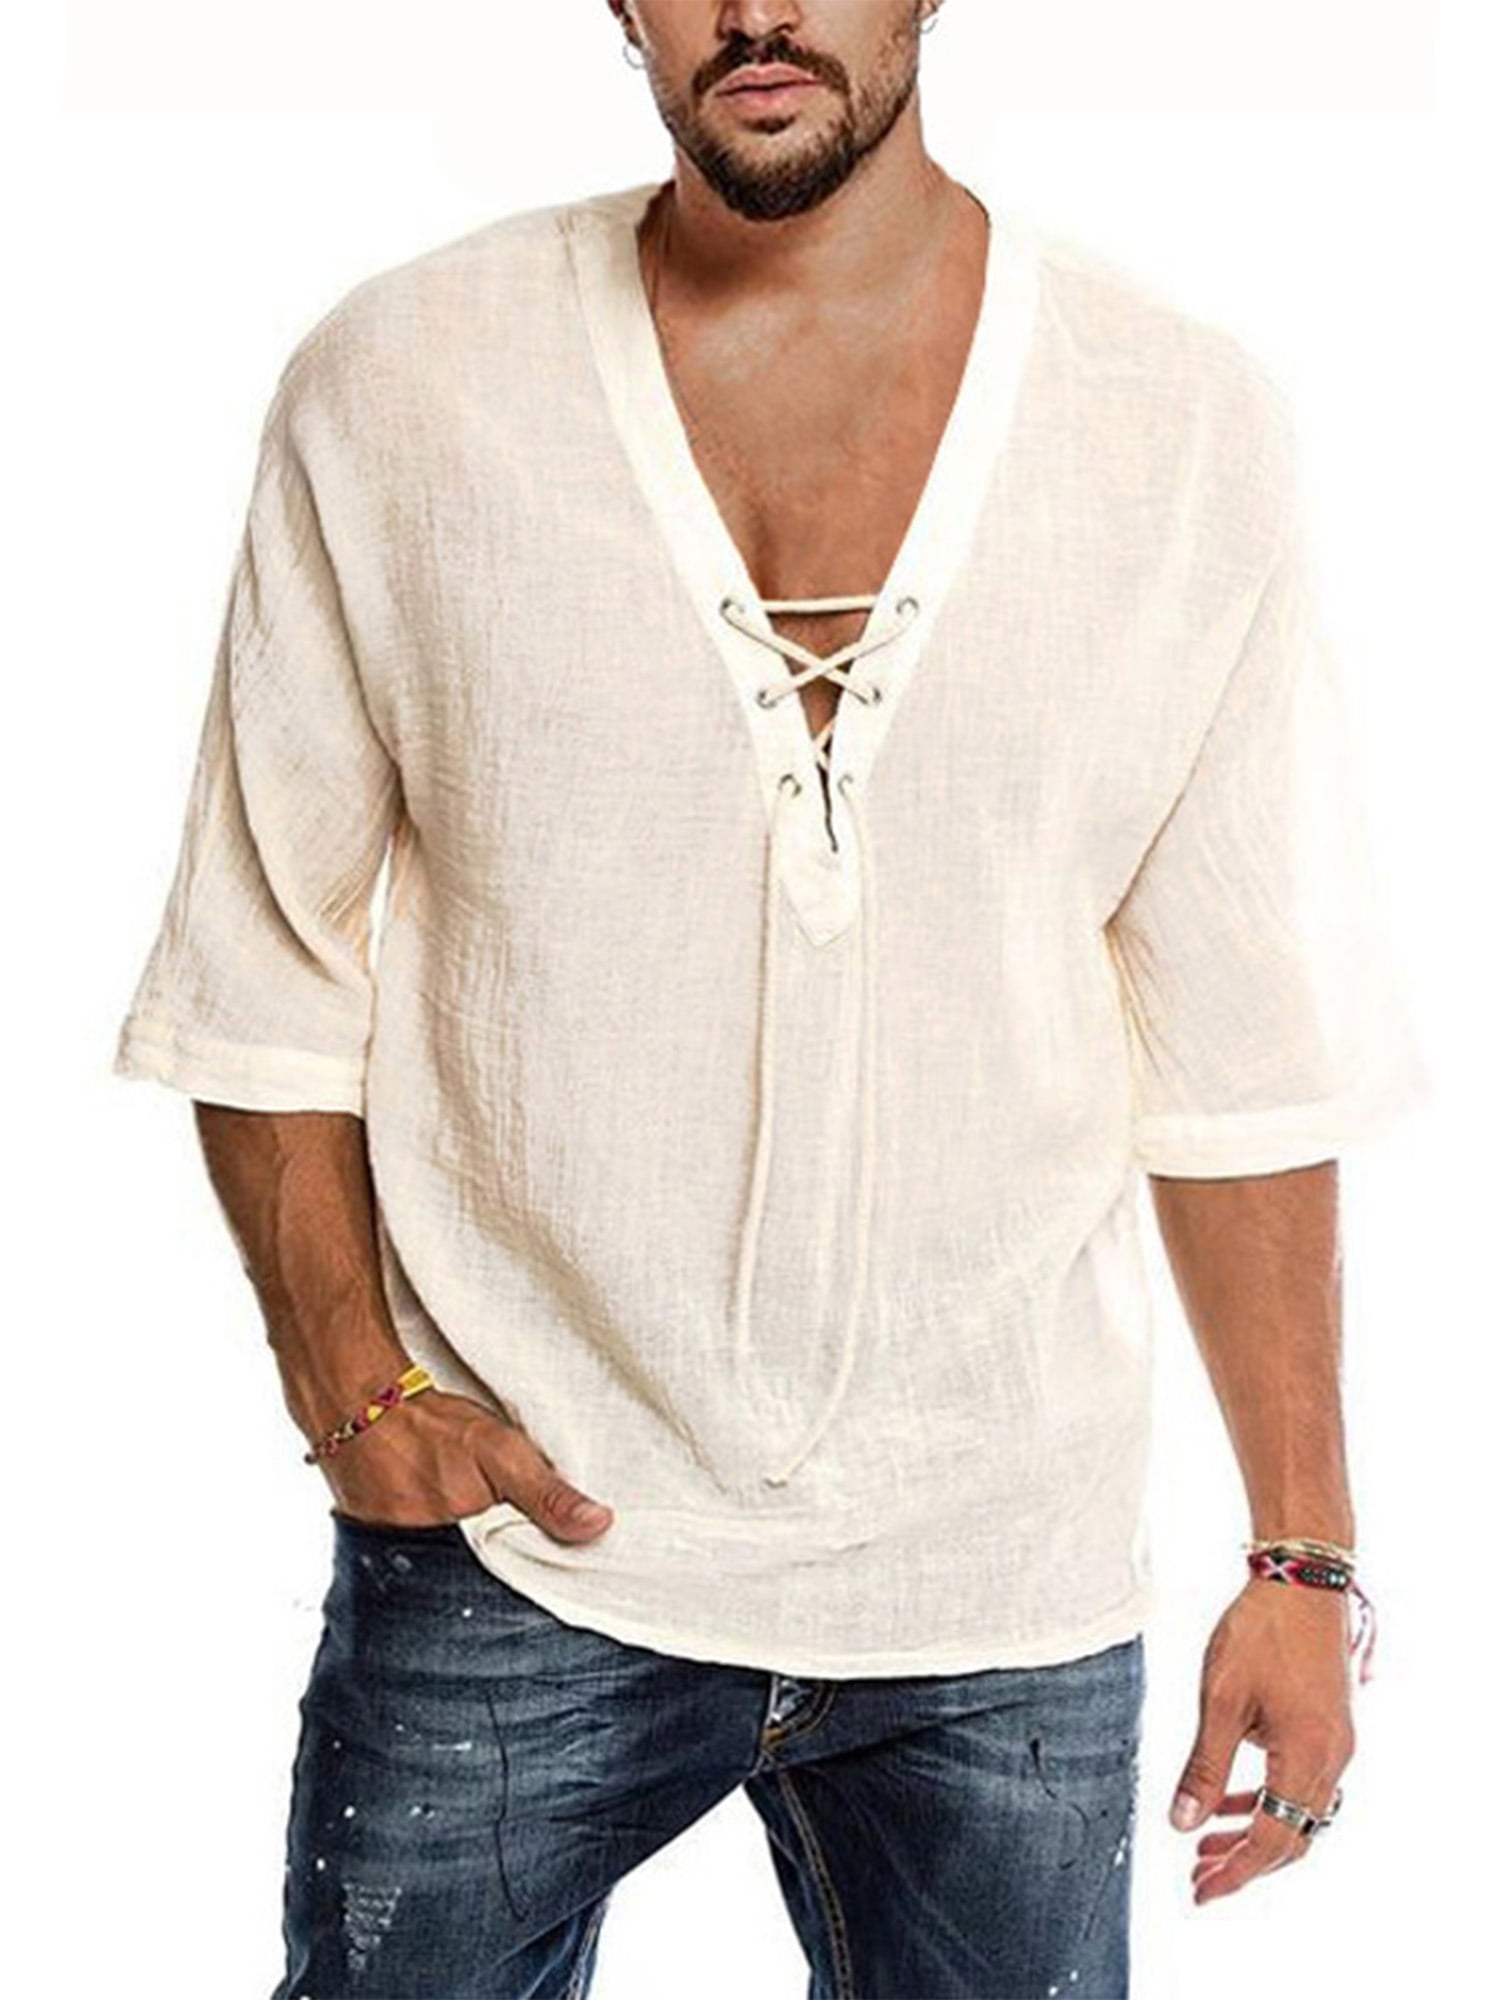 PJ Shirt Kid Yoga 100% Cotton White Long Sleeve Color for Holiday Hippie Beach 